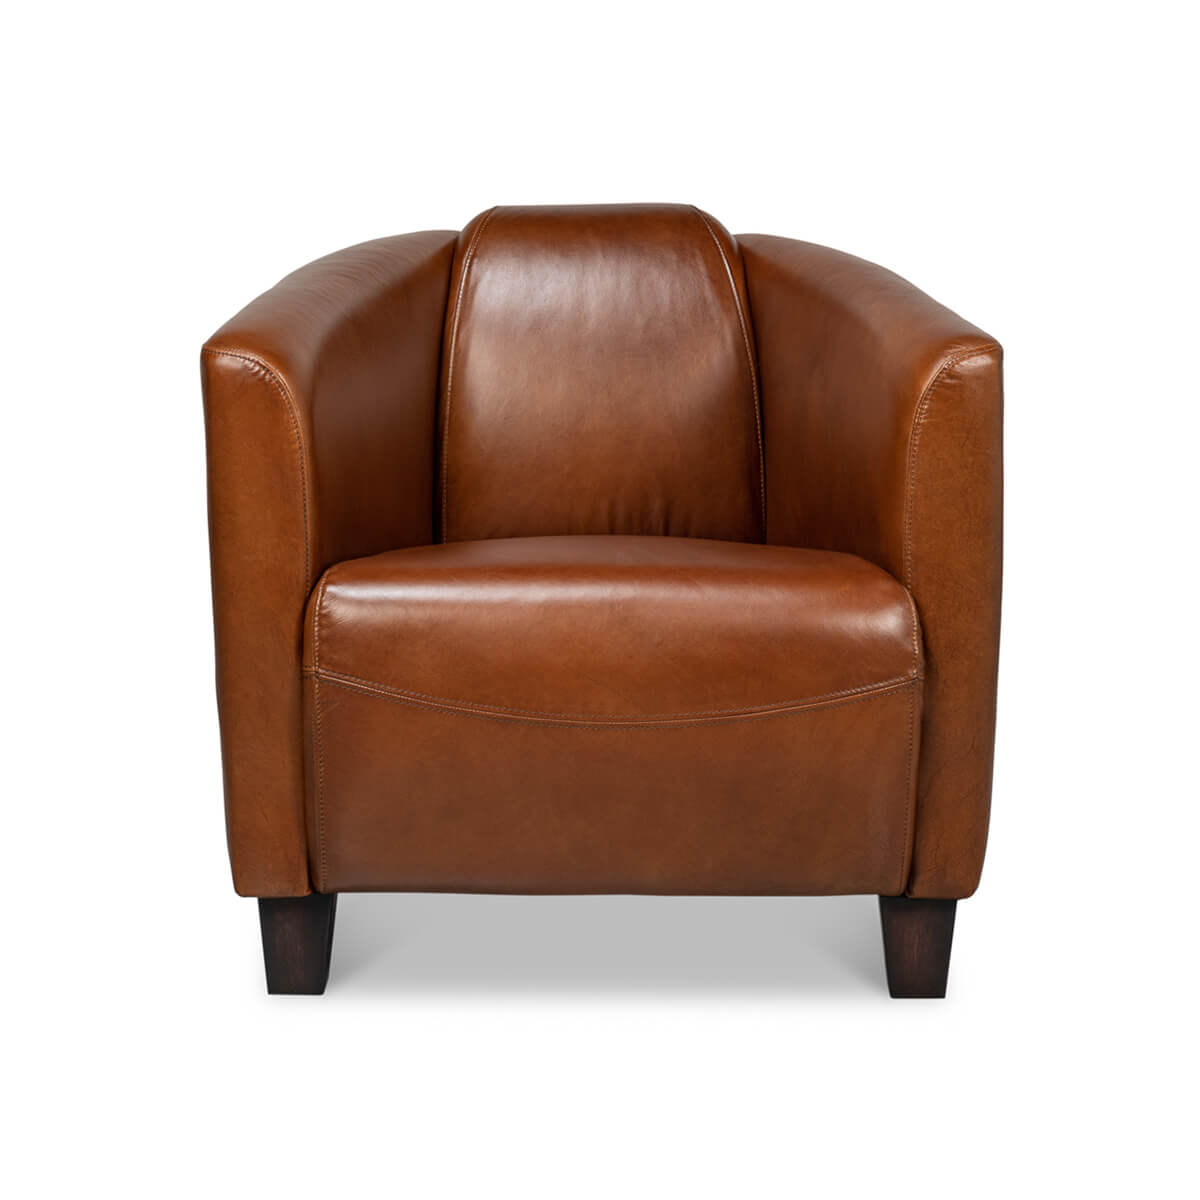 Vintage-Style Brown Leather Club Chair - English Georgian America